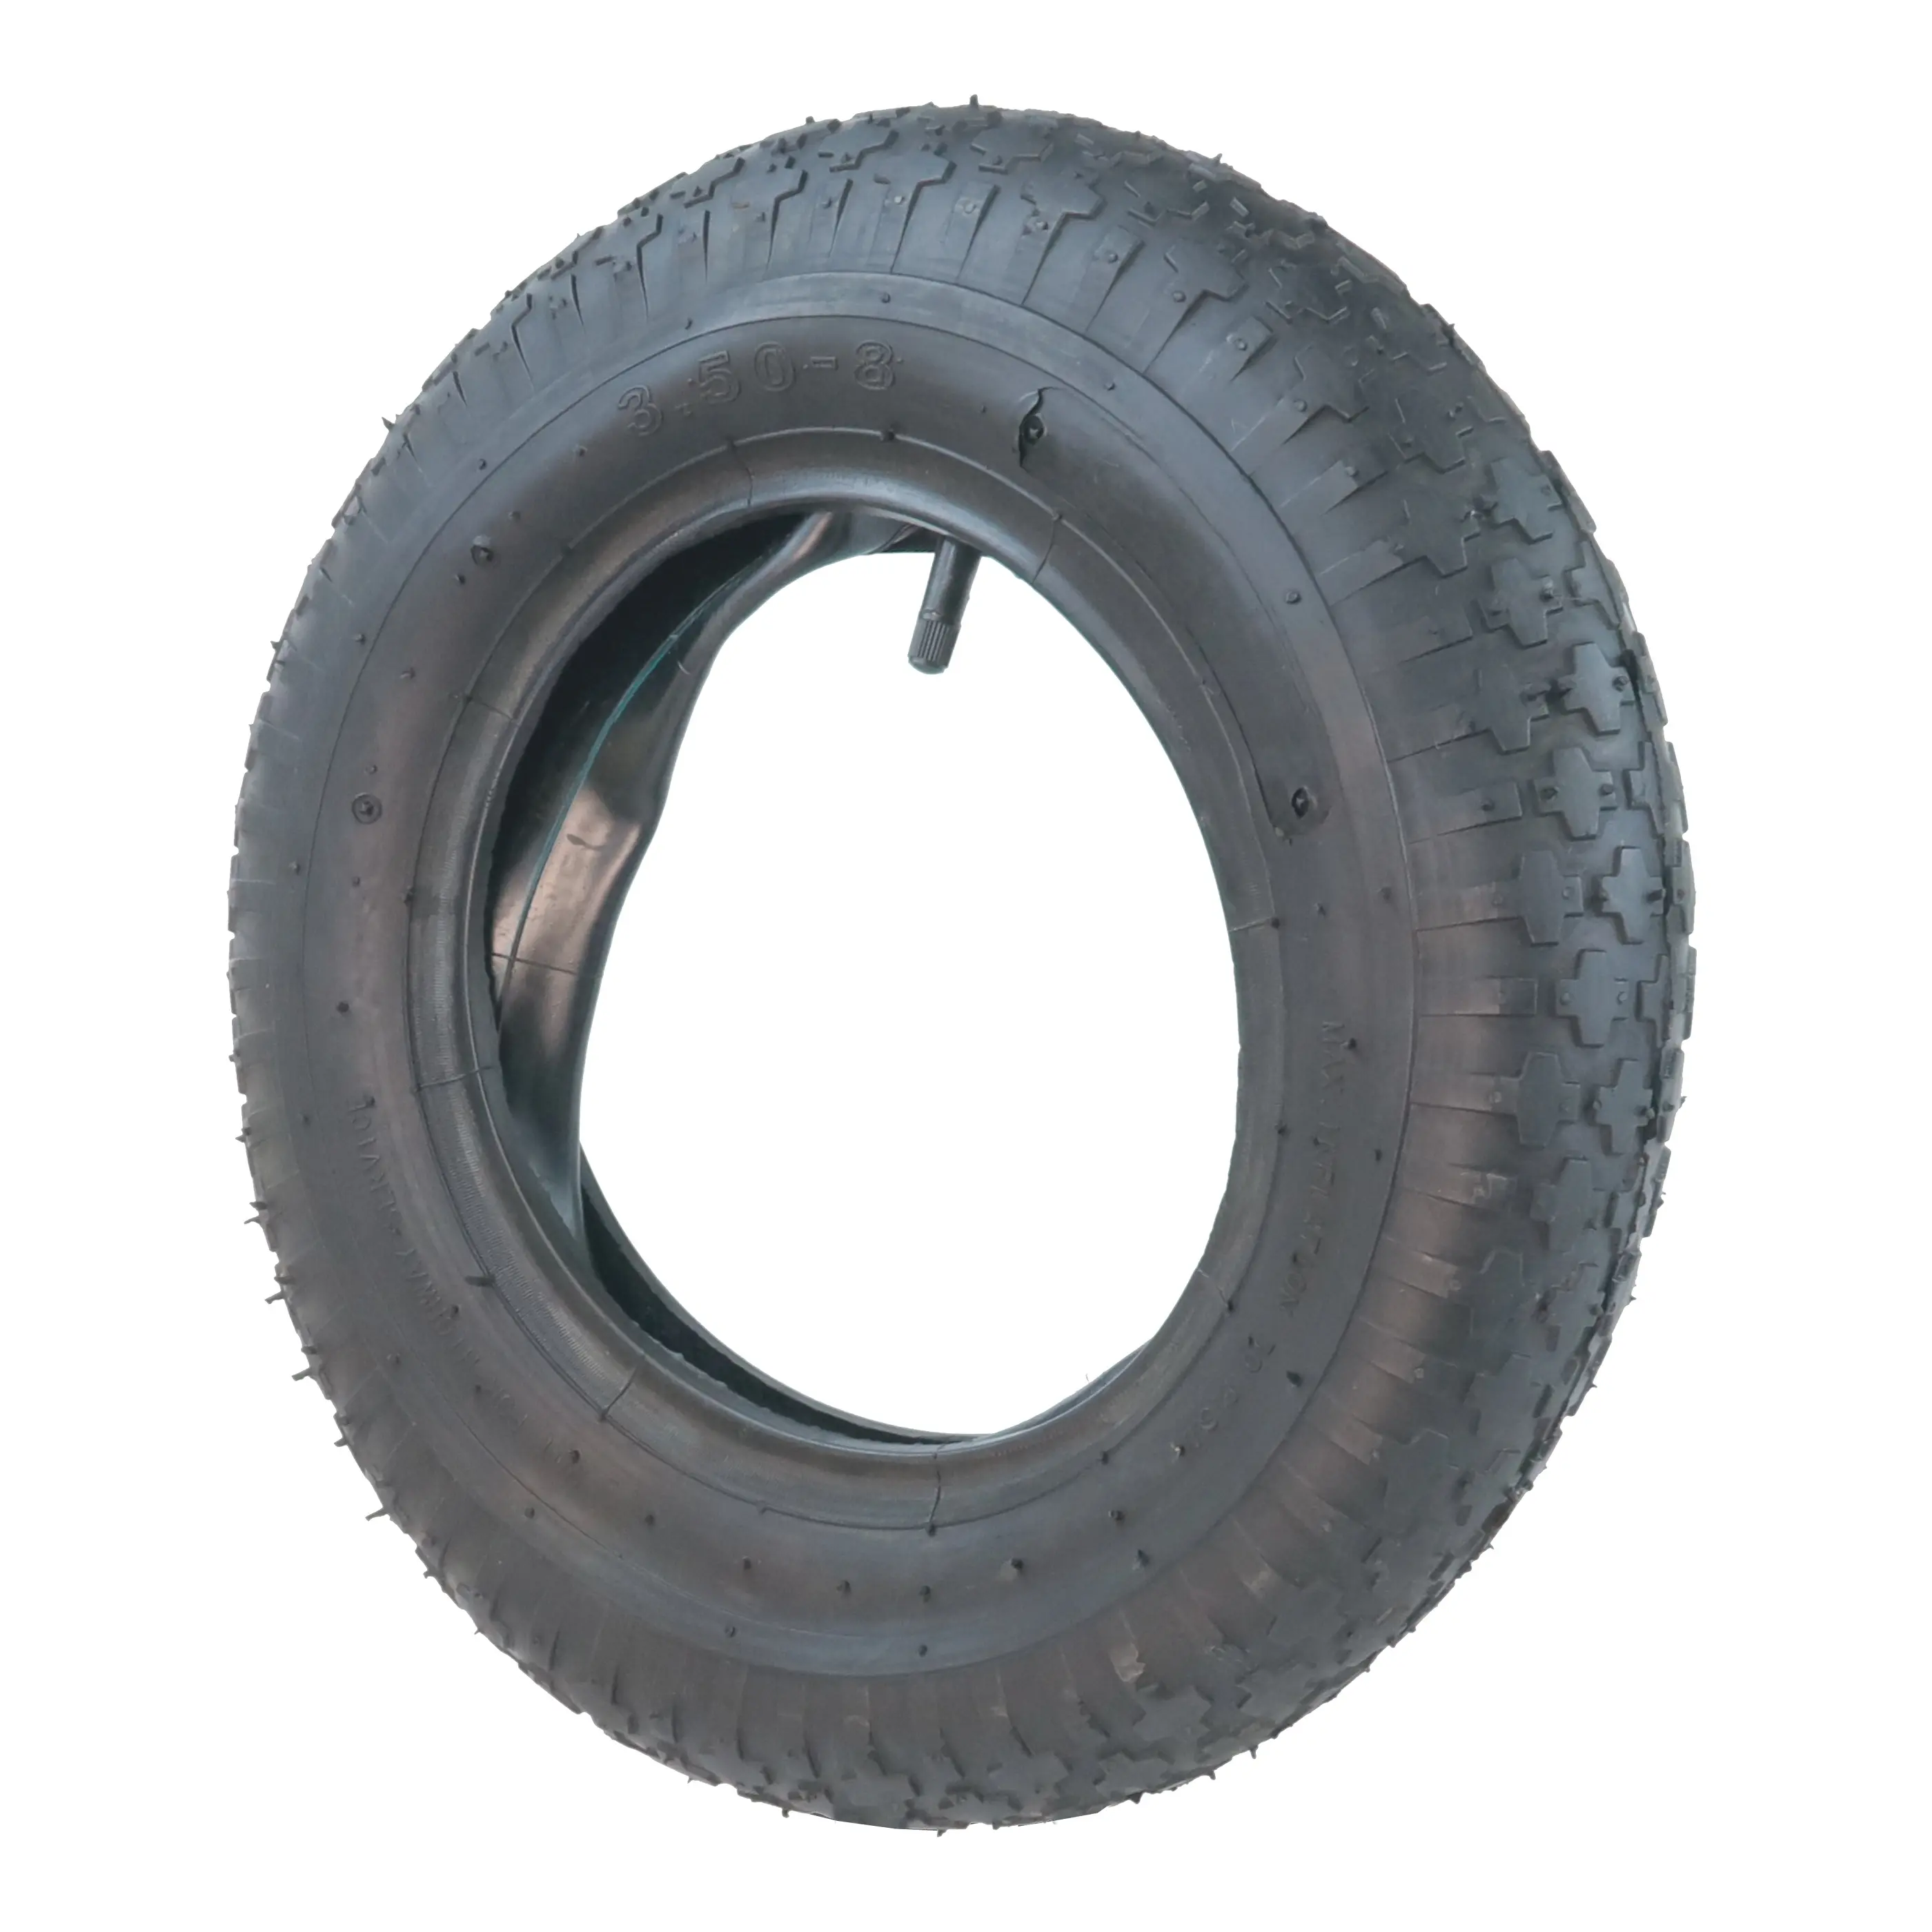 HKT1358 wholesale 14 inch wheelbarrow tyres 3.50-8 diamond and comb pattern tyre wheelbarrow rubber tyre and tube